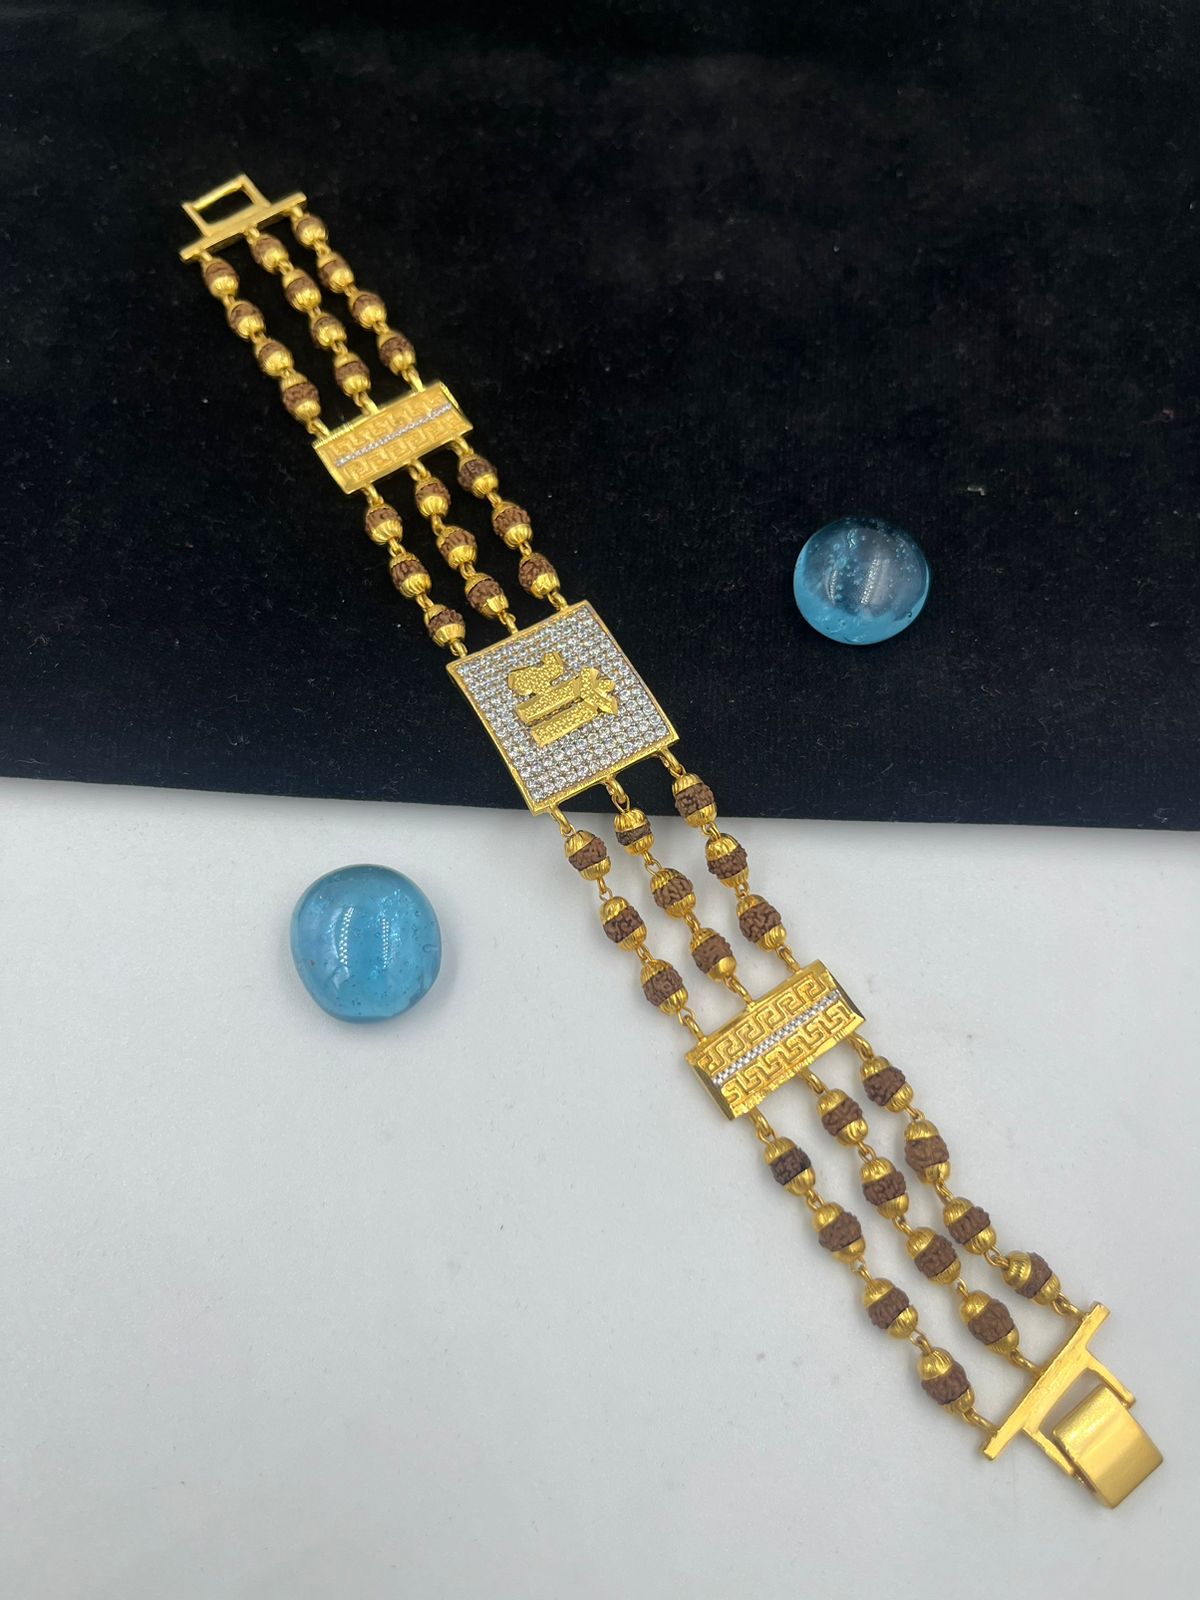 Buy Anshraj Gold Plated 5-Mukhi Modern Rudraksha Bracelet for Men -  Traditional Spiritual Jewelry for Positive Energy and Healing at Amazon.in